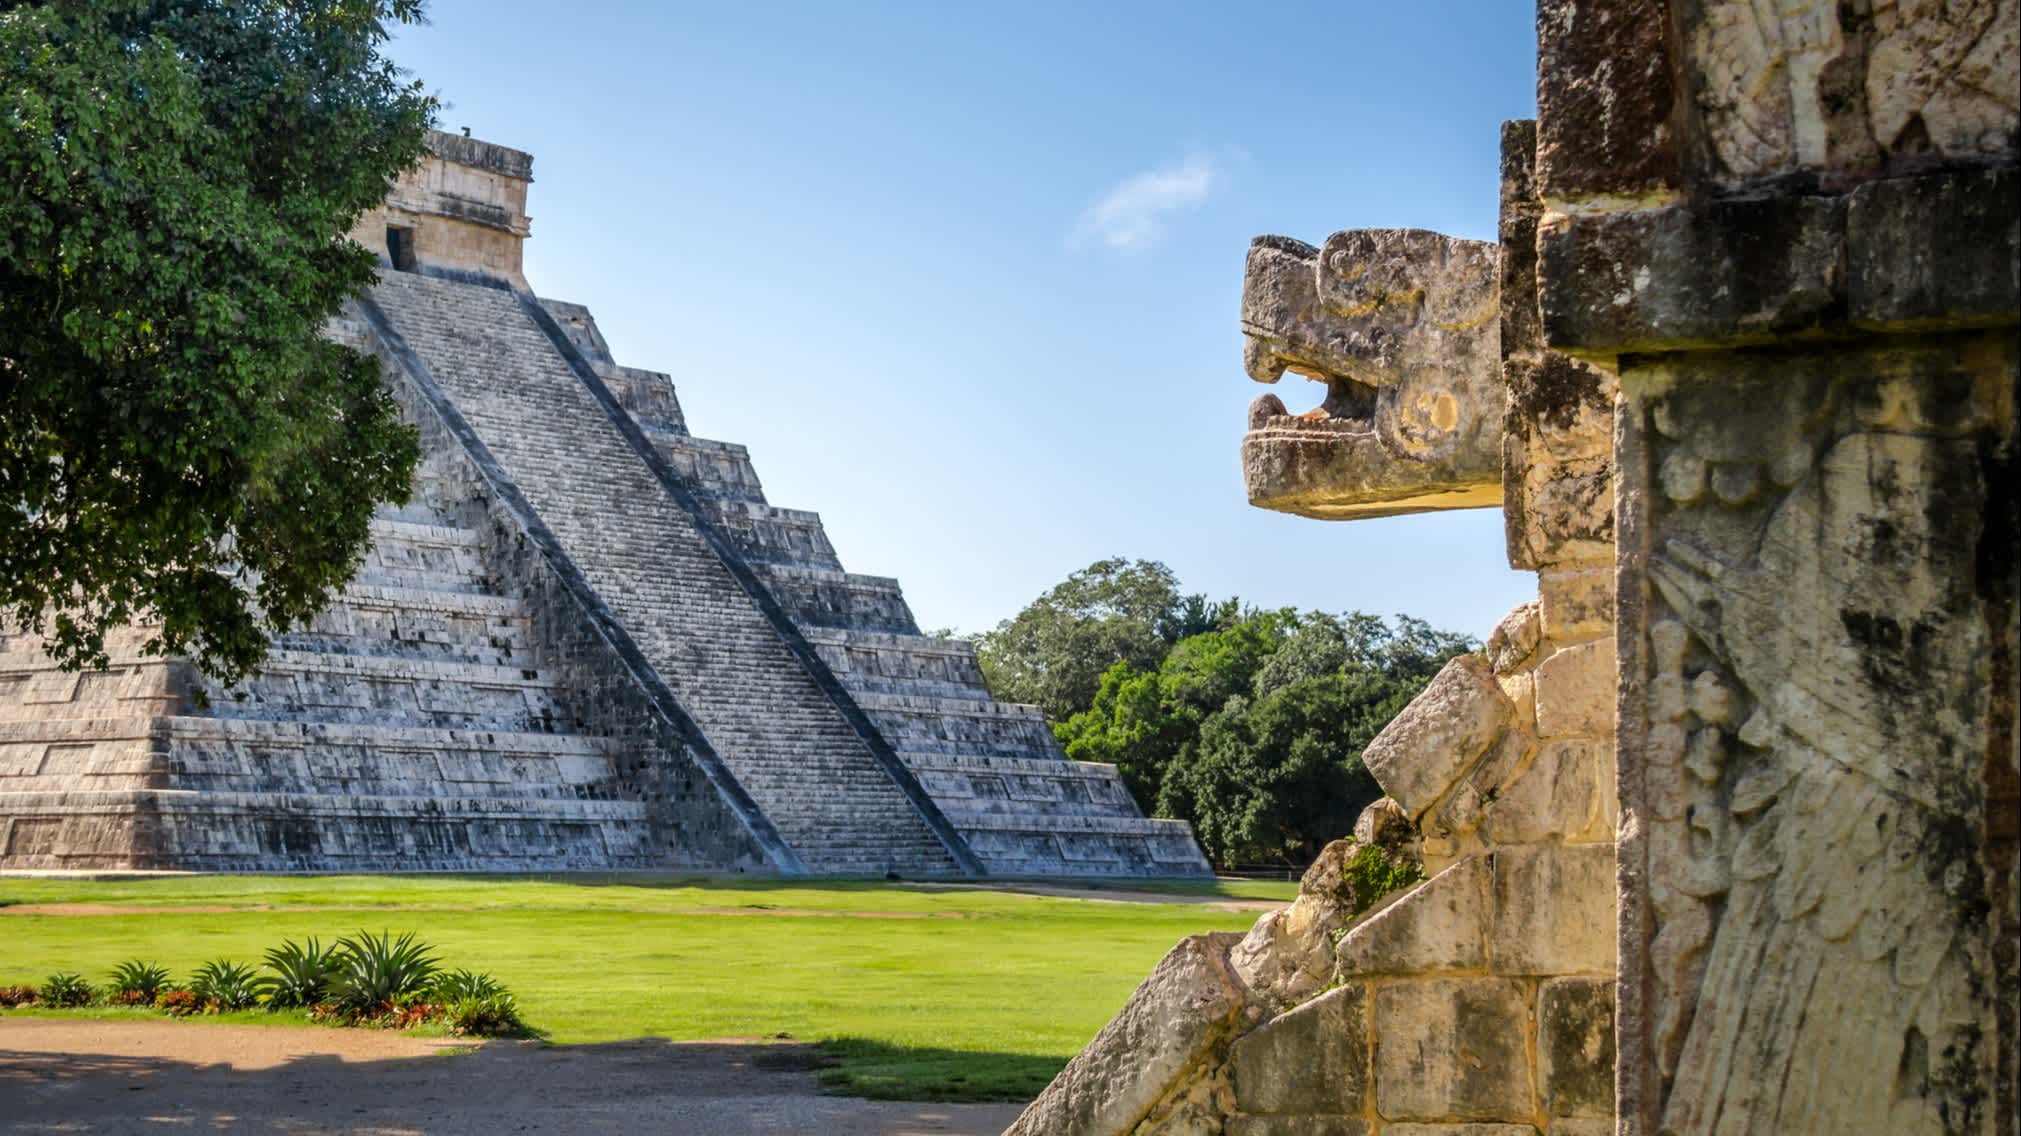 Jaguarkopf und Maya-Tempelpyramide von Kukulkan - Chichen Itza, Yucatan, Mexiko